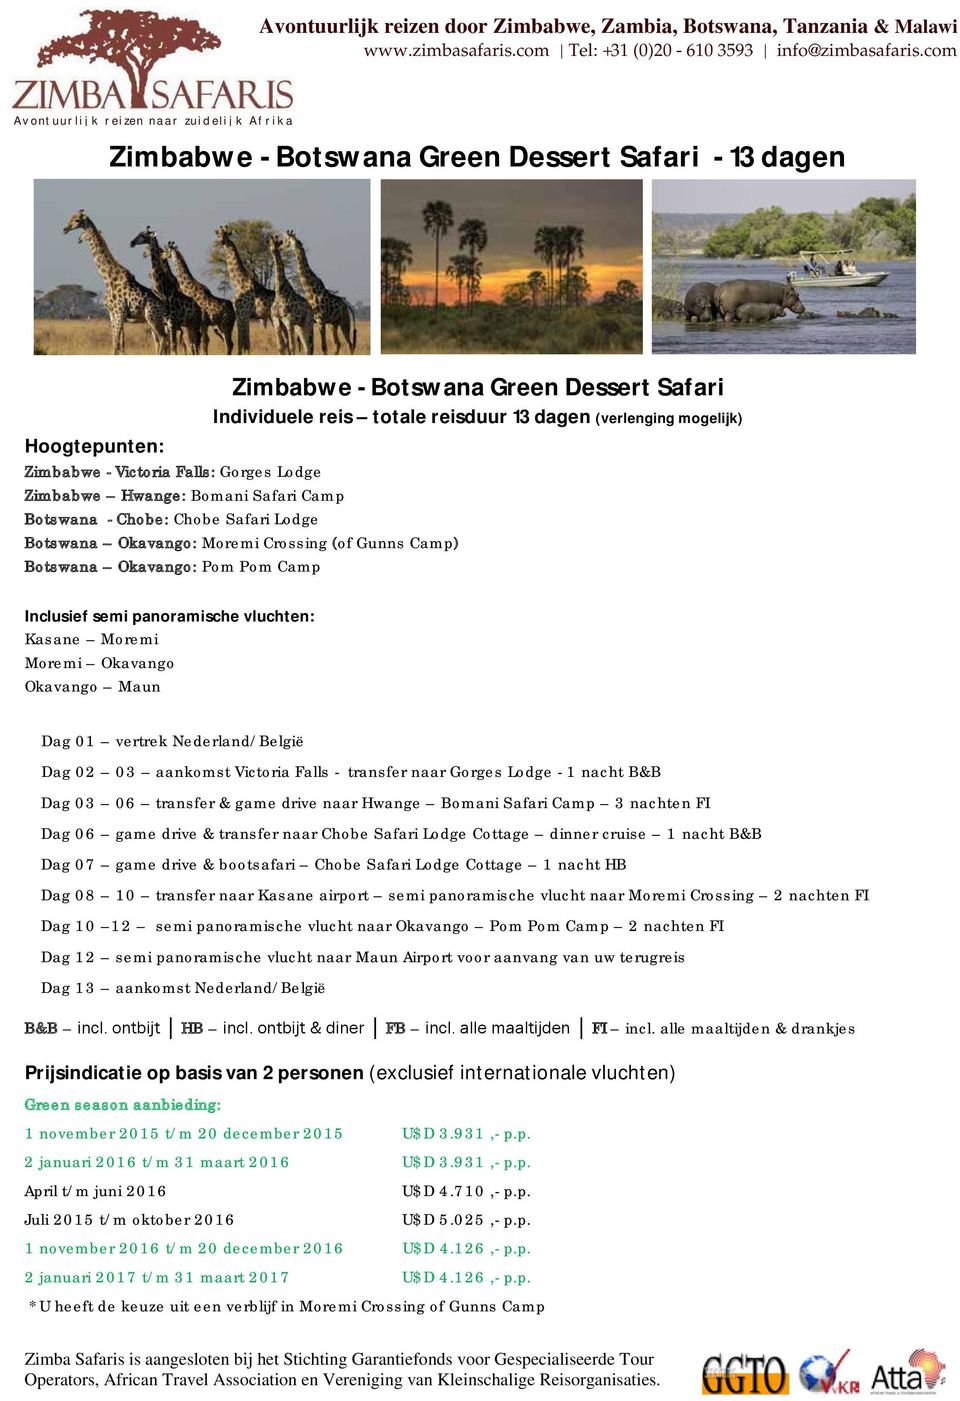 vluchten: Kasane Moremi Moremi Okavango Okavango Maun Dag 01 vertrek Nederland/België Dag 02 03 aankomst Victoria Falls - transfer naar Gorges Lodge - 1 nacht B&B Dag 03 06 transfer & game drive naar